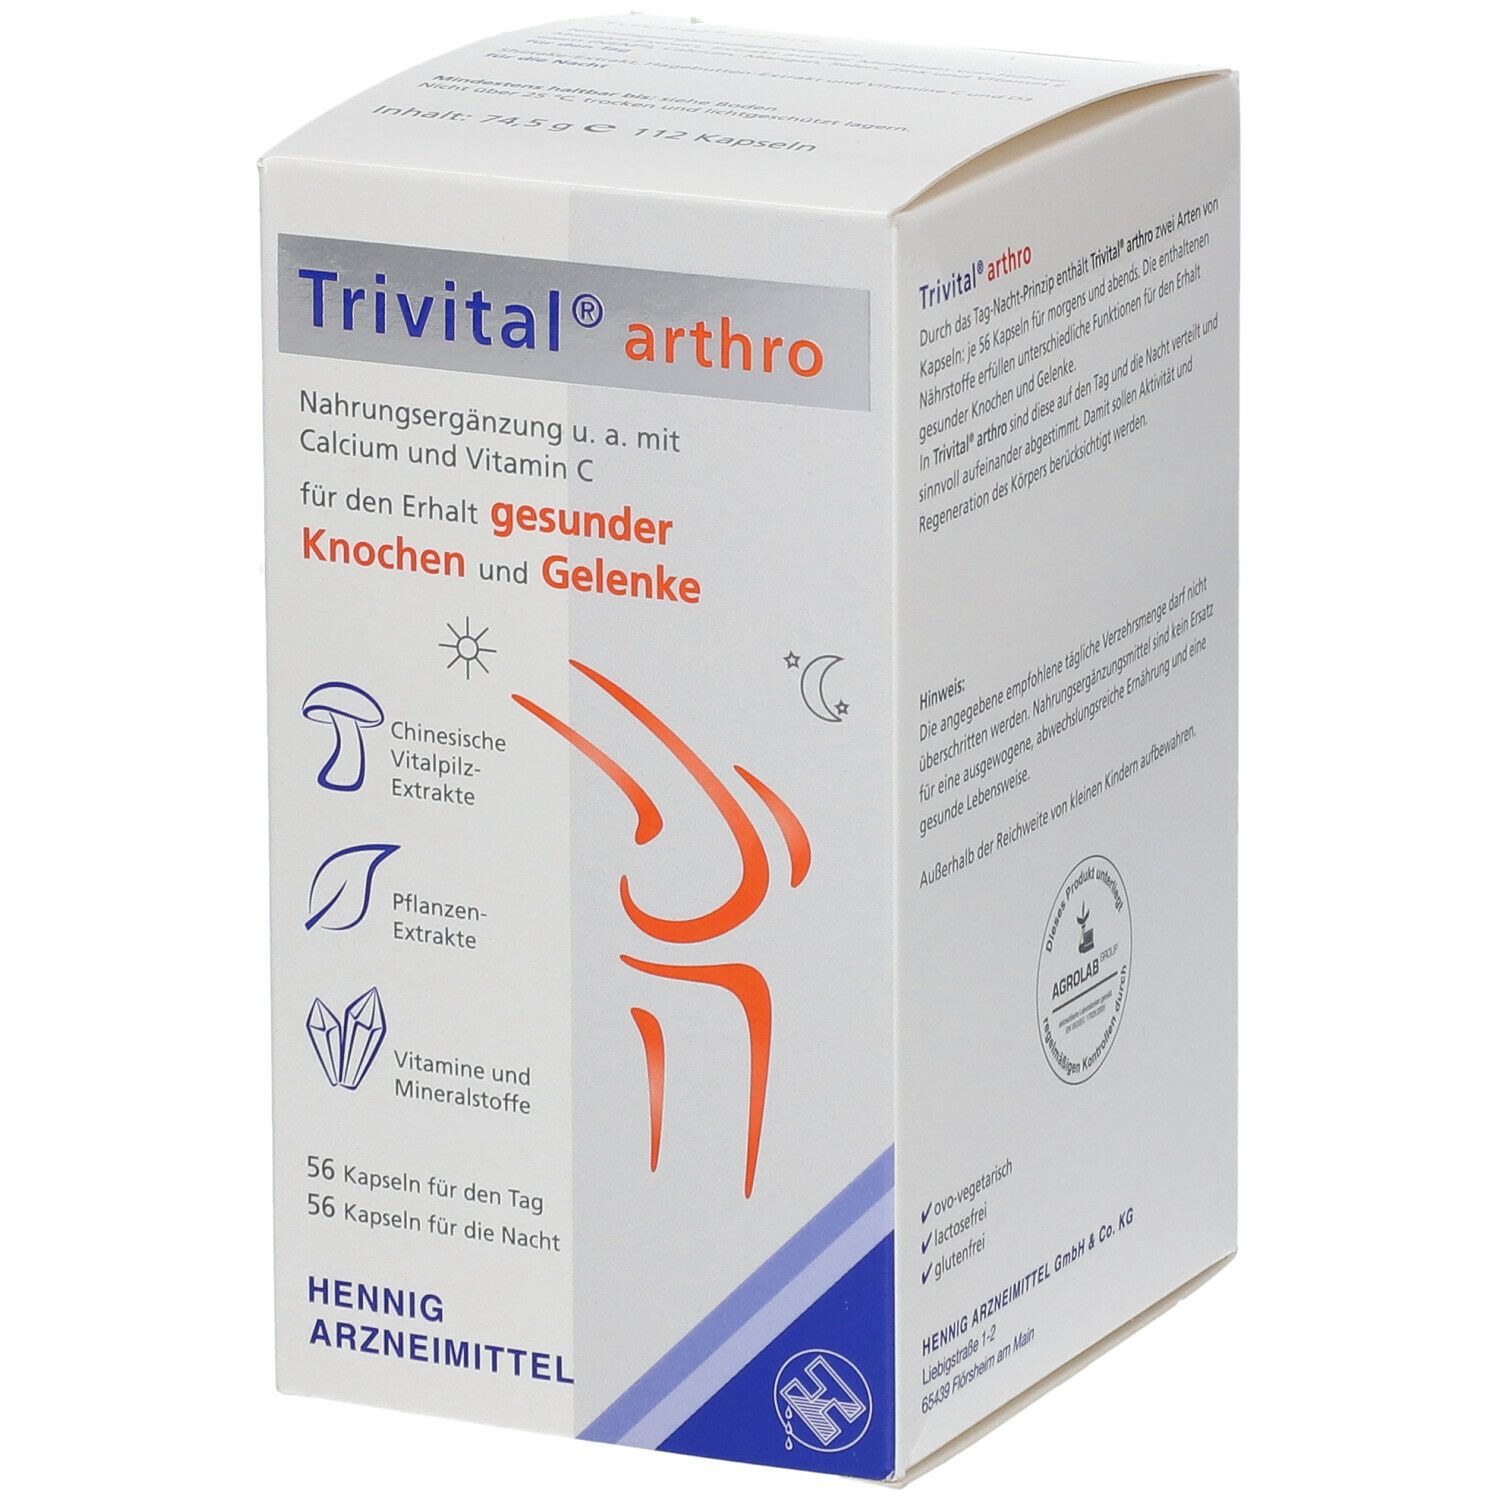 Trivital® arthro